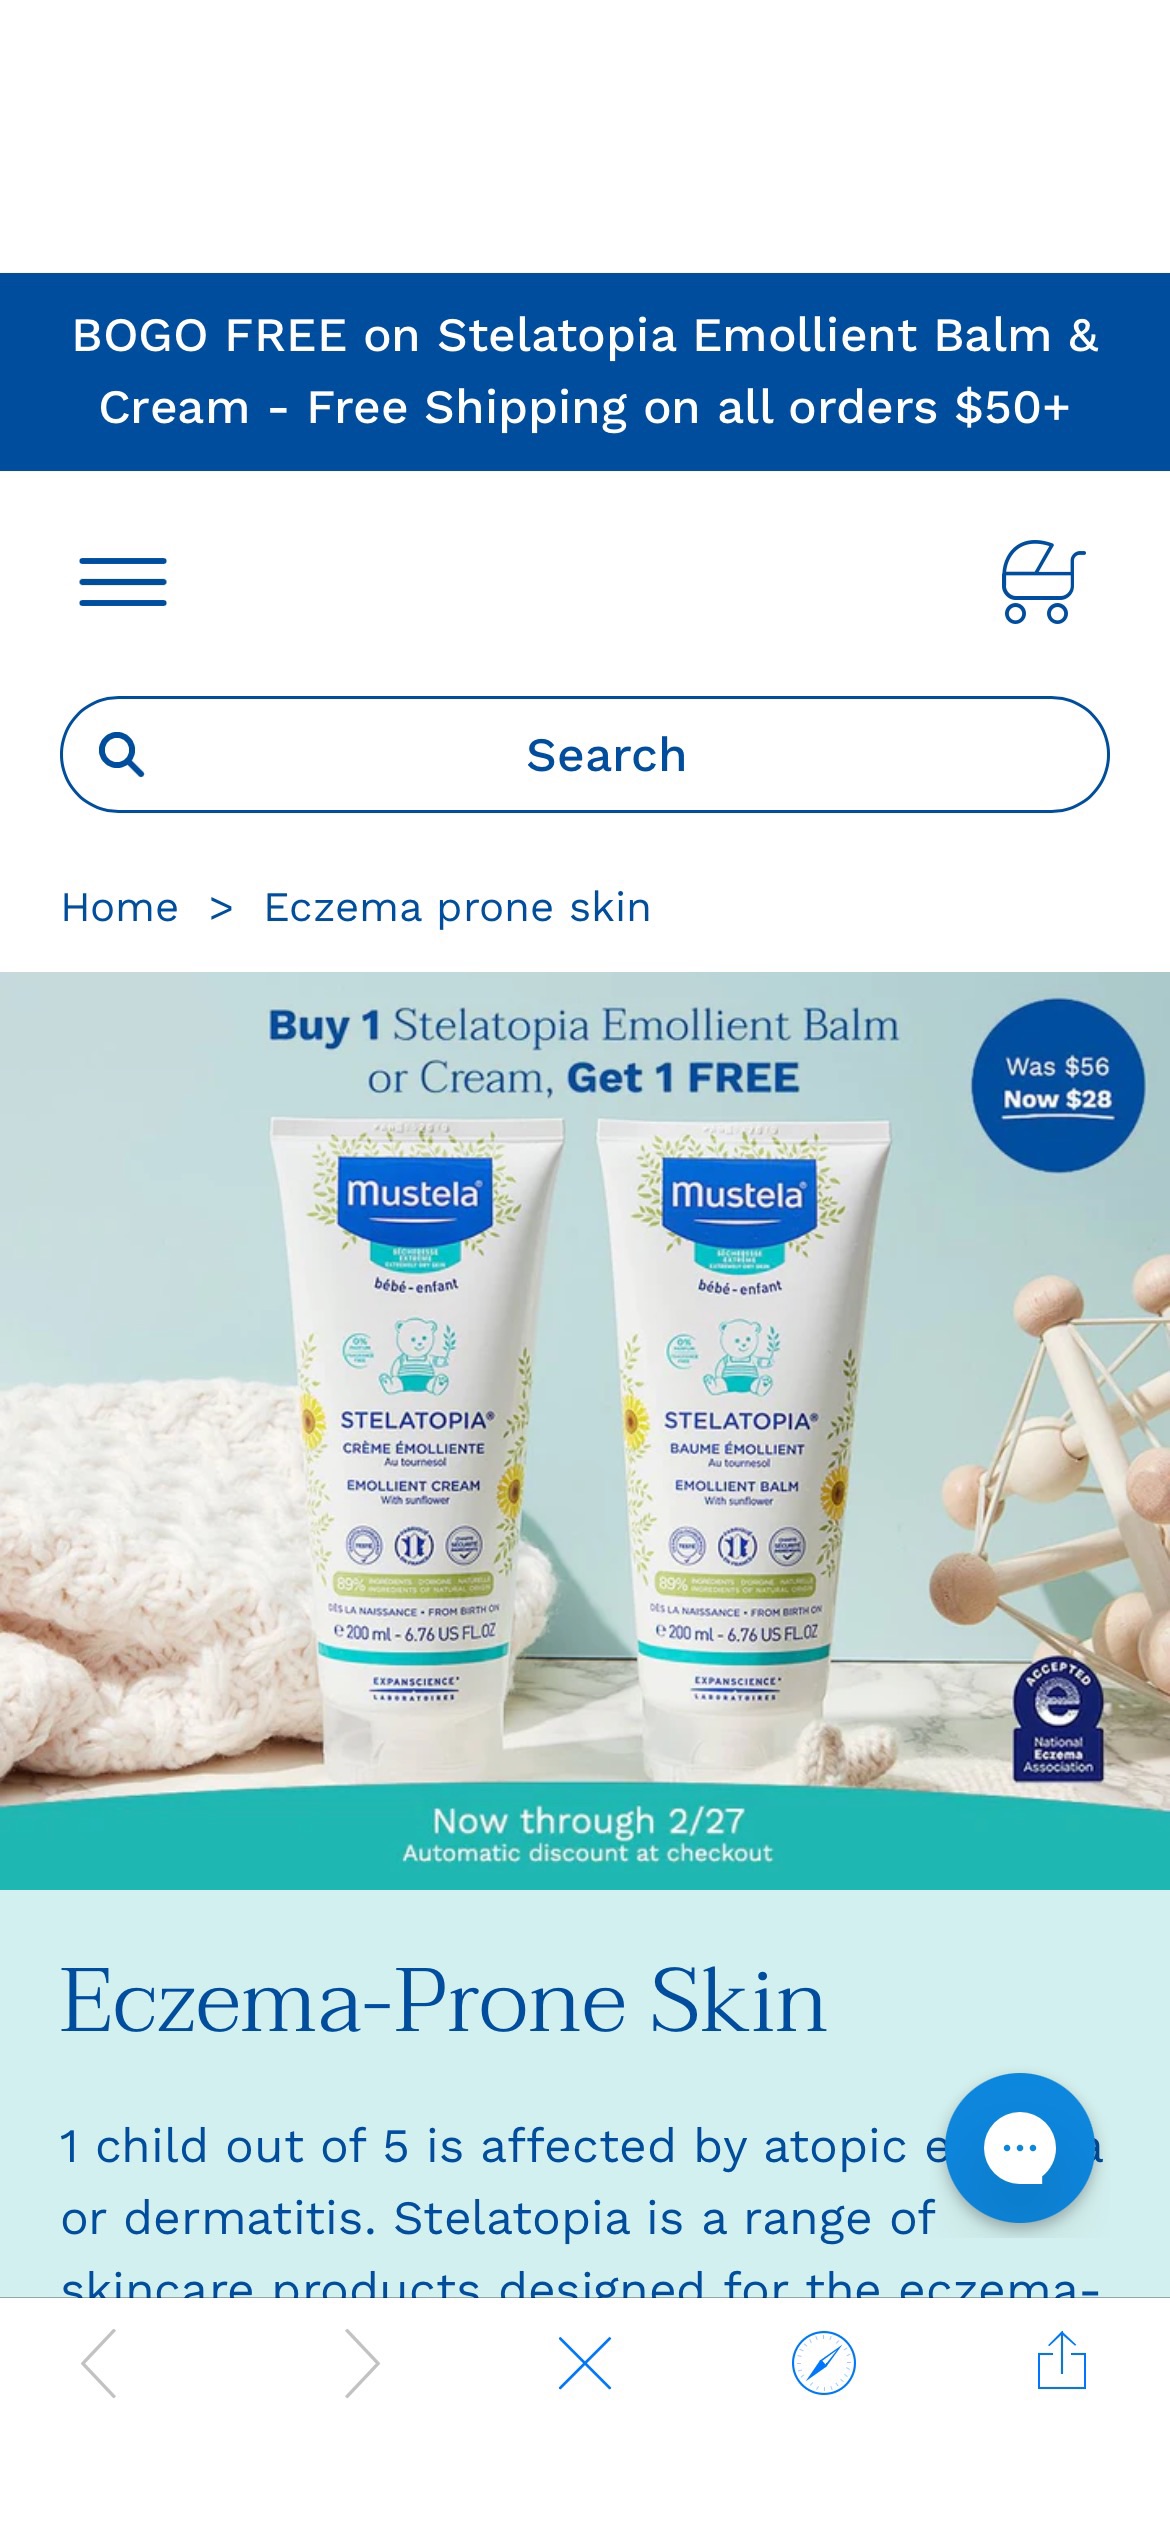 Skincare For Babies & Newborns With Eczema-Prone Skin